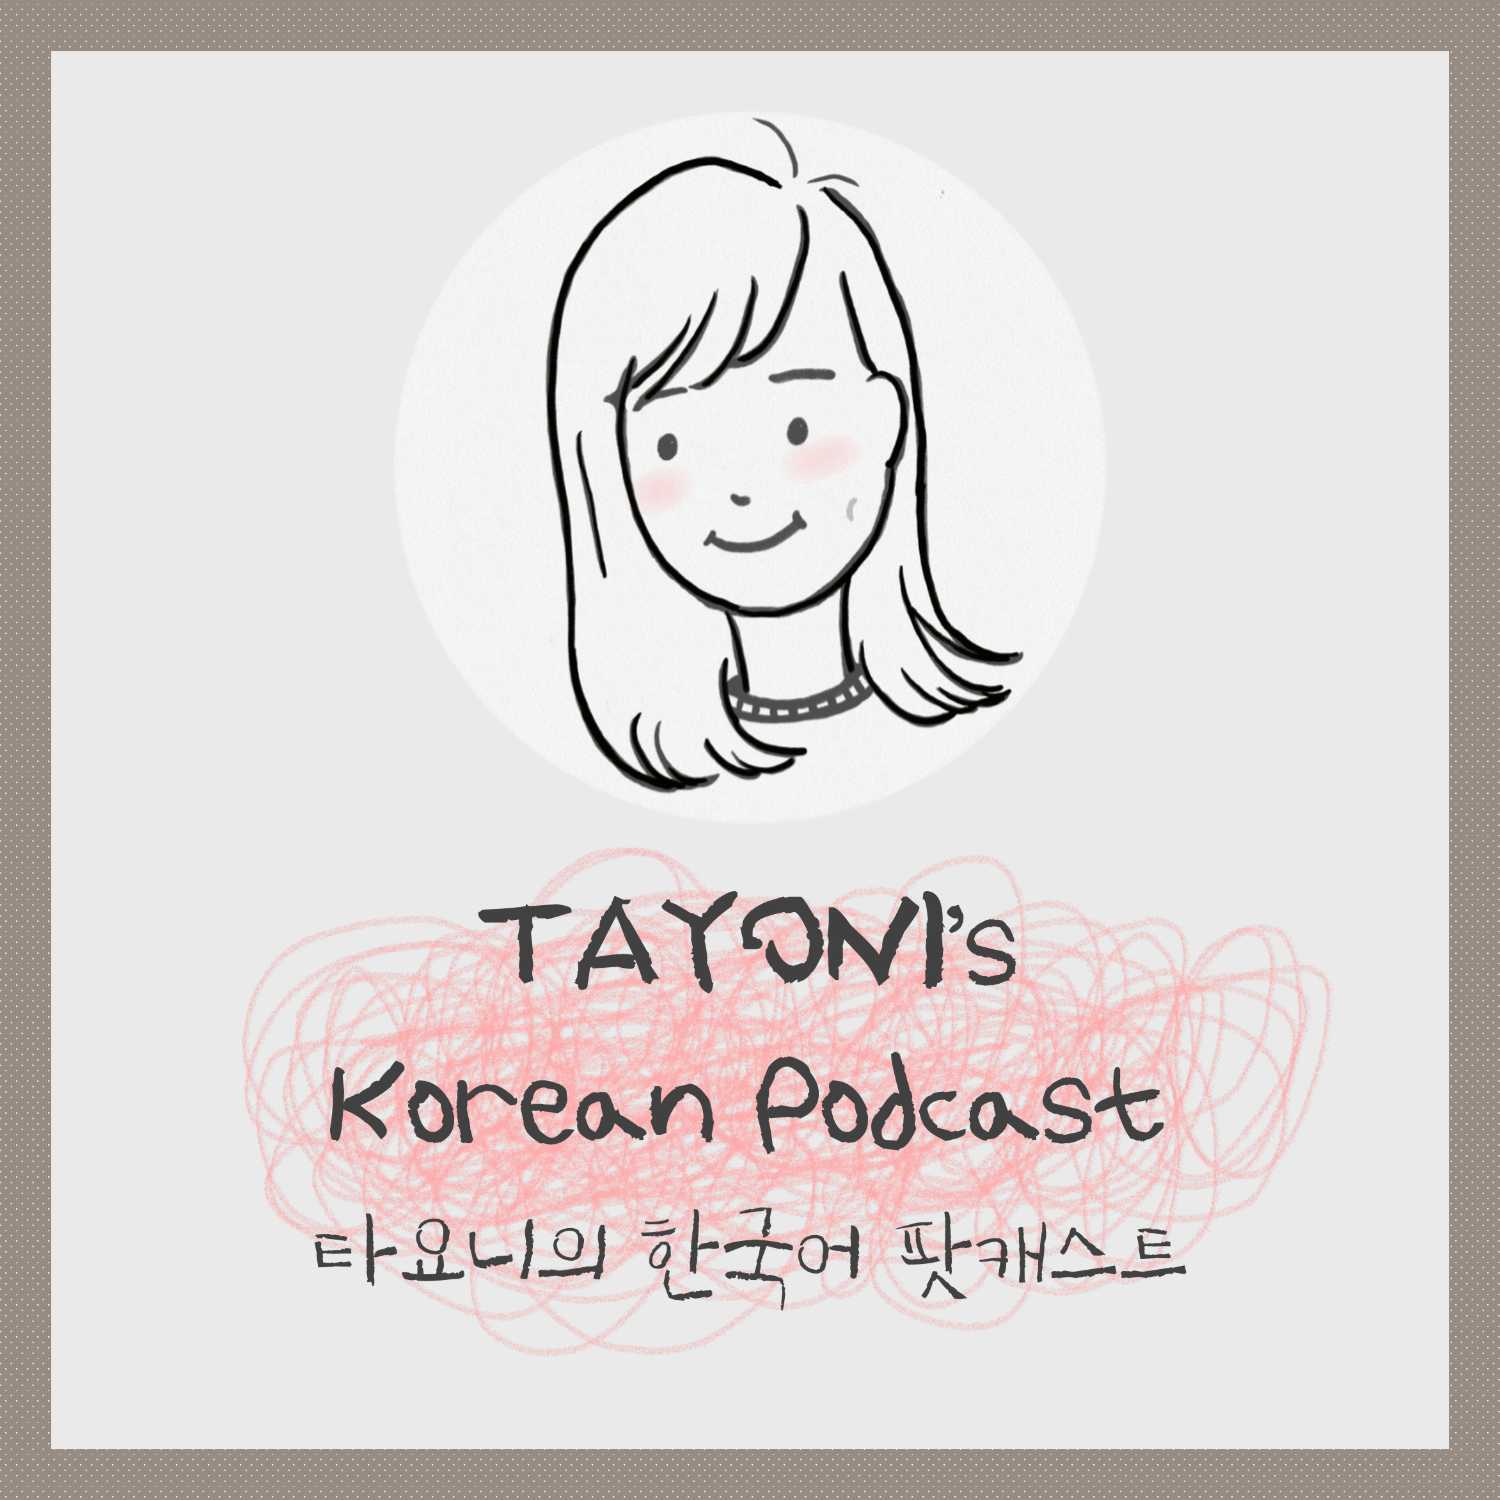 TAYONI's Korean Podcast